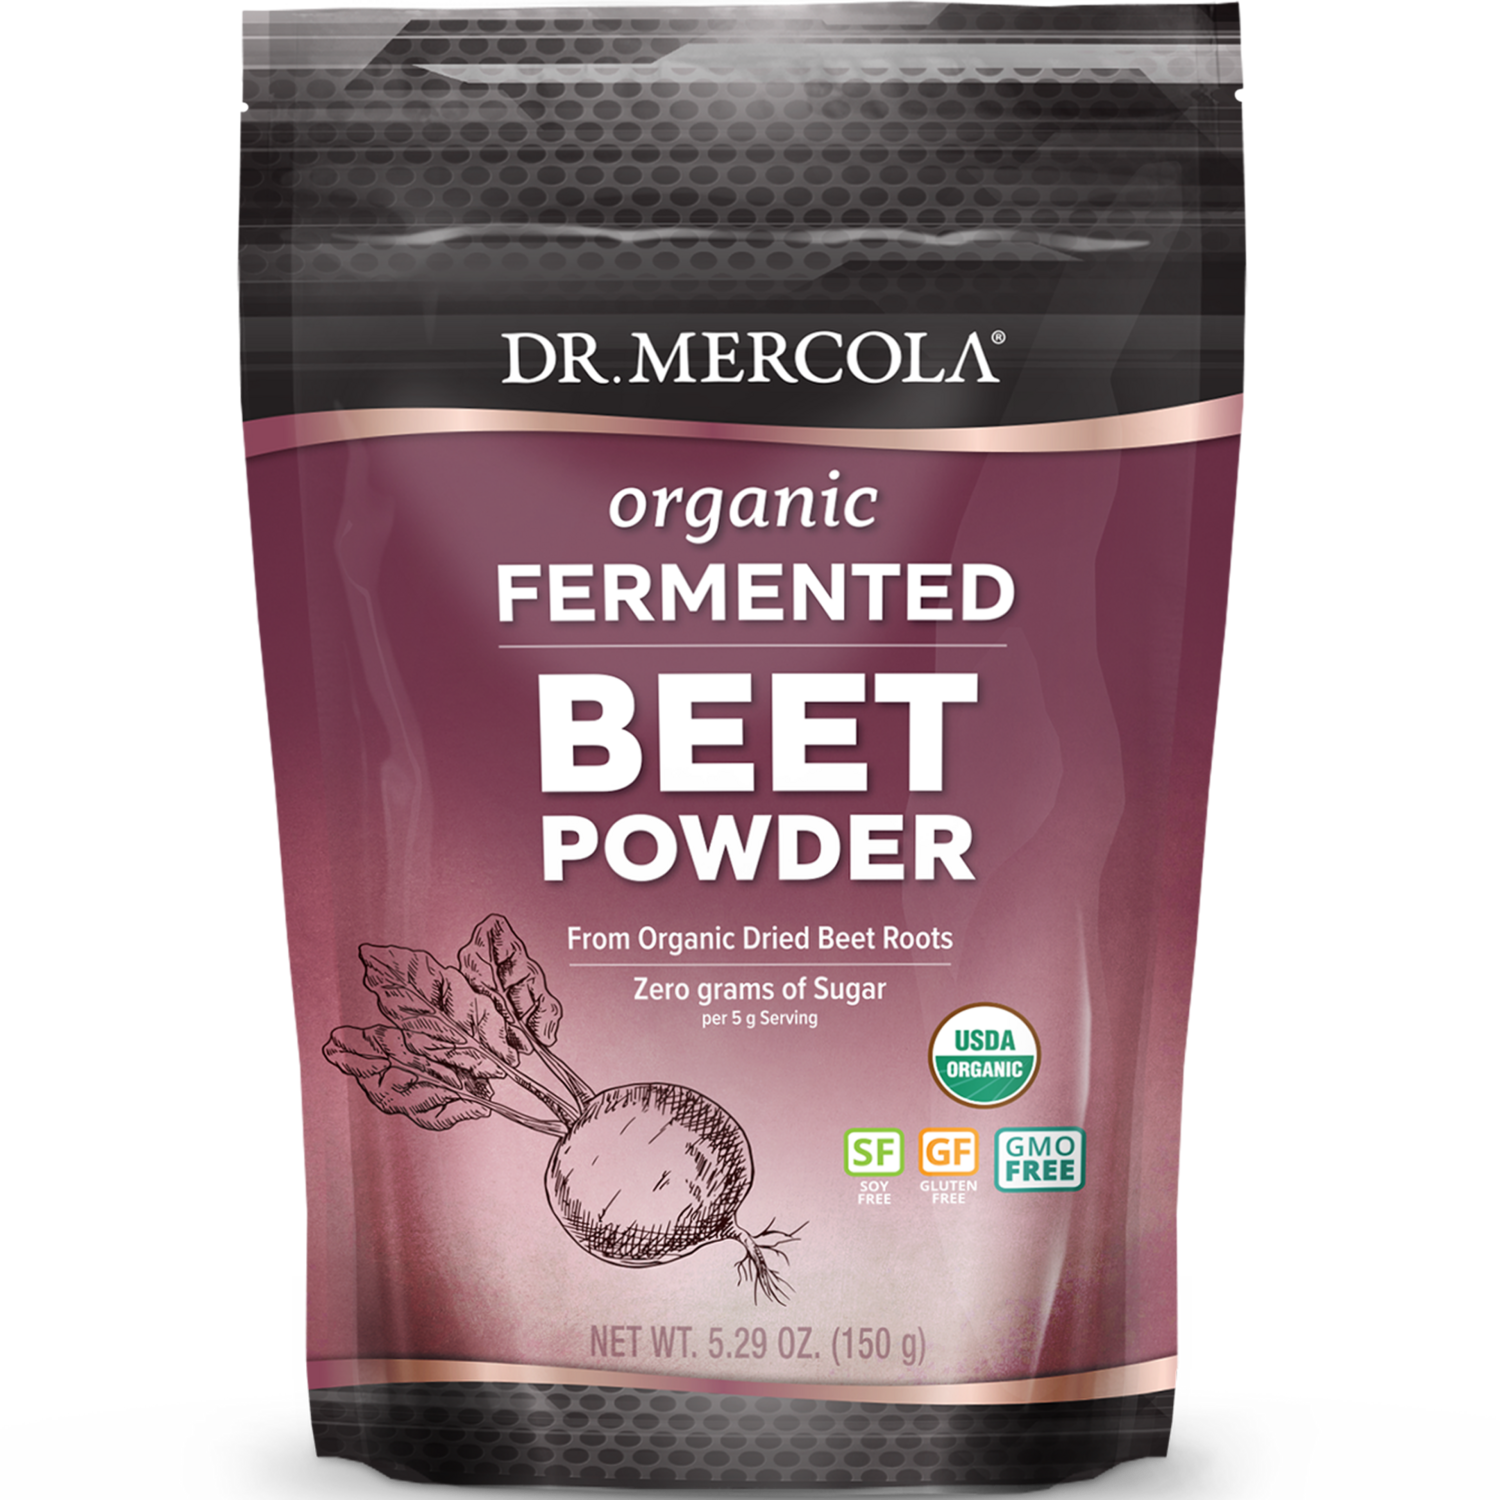 Fermented Beet Powder 30 servings Dr. Mercola